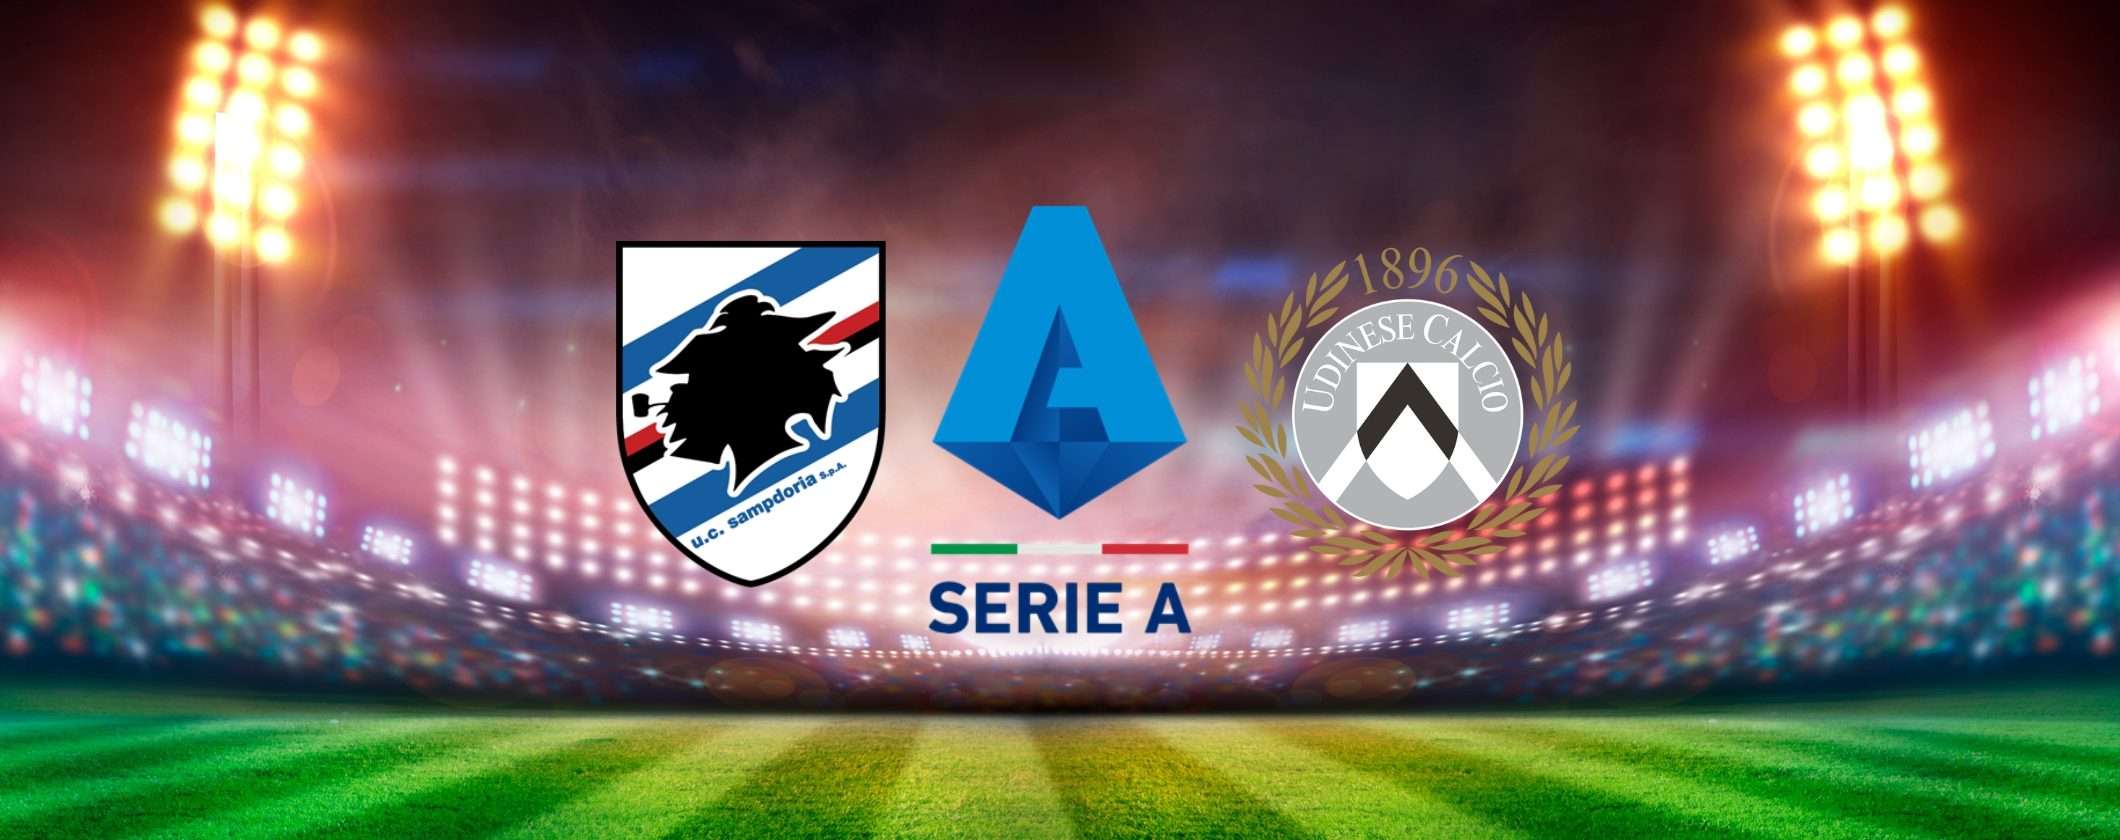 Sampdoria-Udinese in streaming: ecco le soluzioni legali